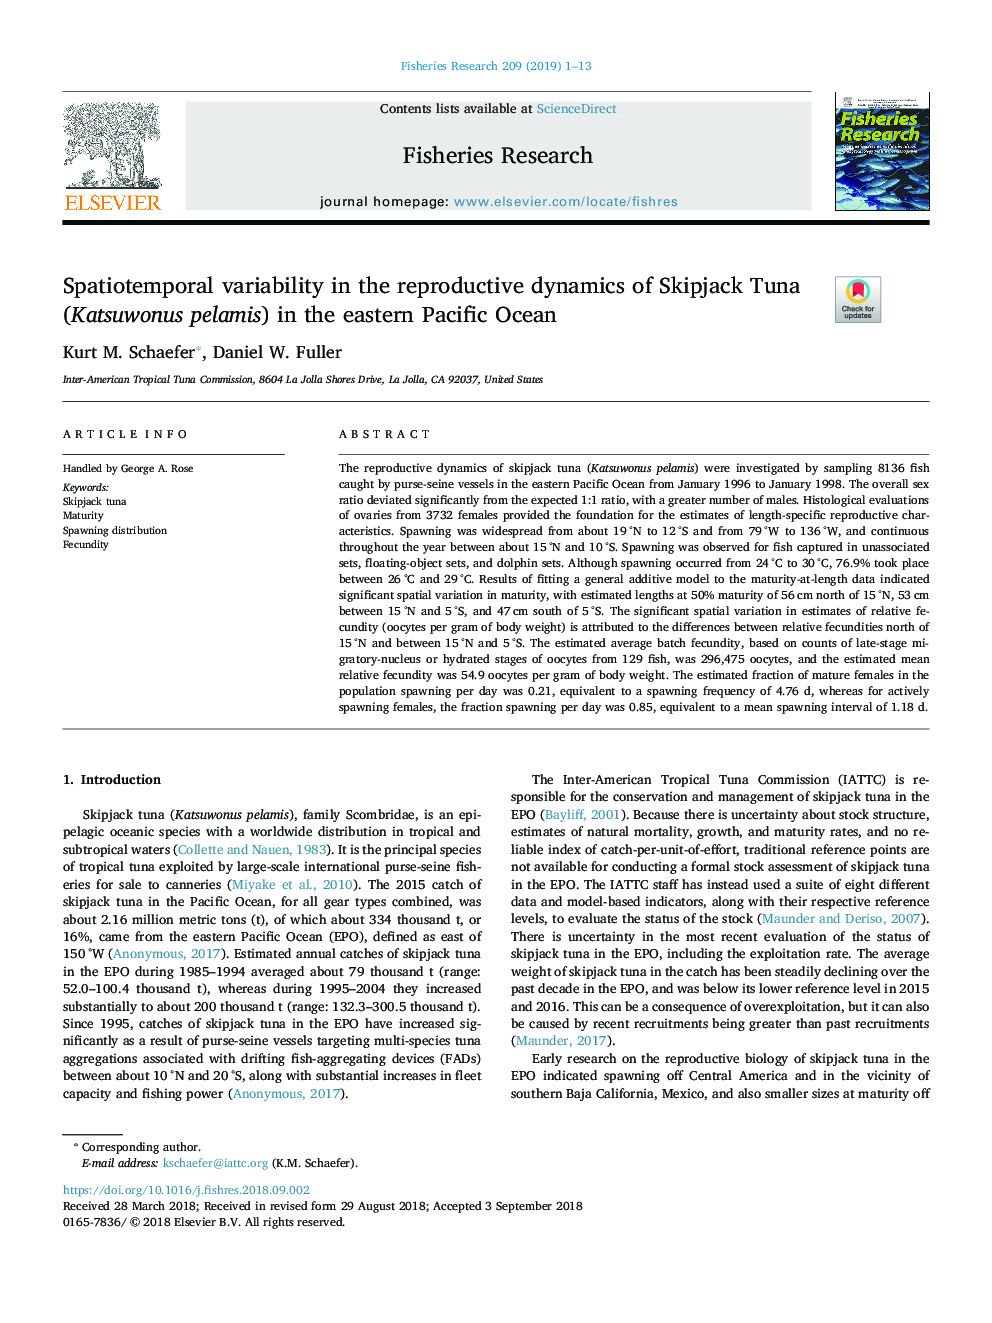 Spatiotemporal variability in the reproductive dynamics of Skipjack Tuna (Katsuwonus pelamis) in the eastern Pacific Ocean